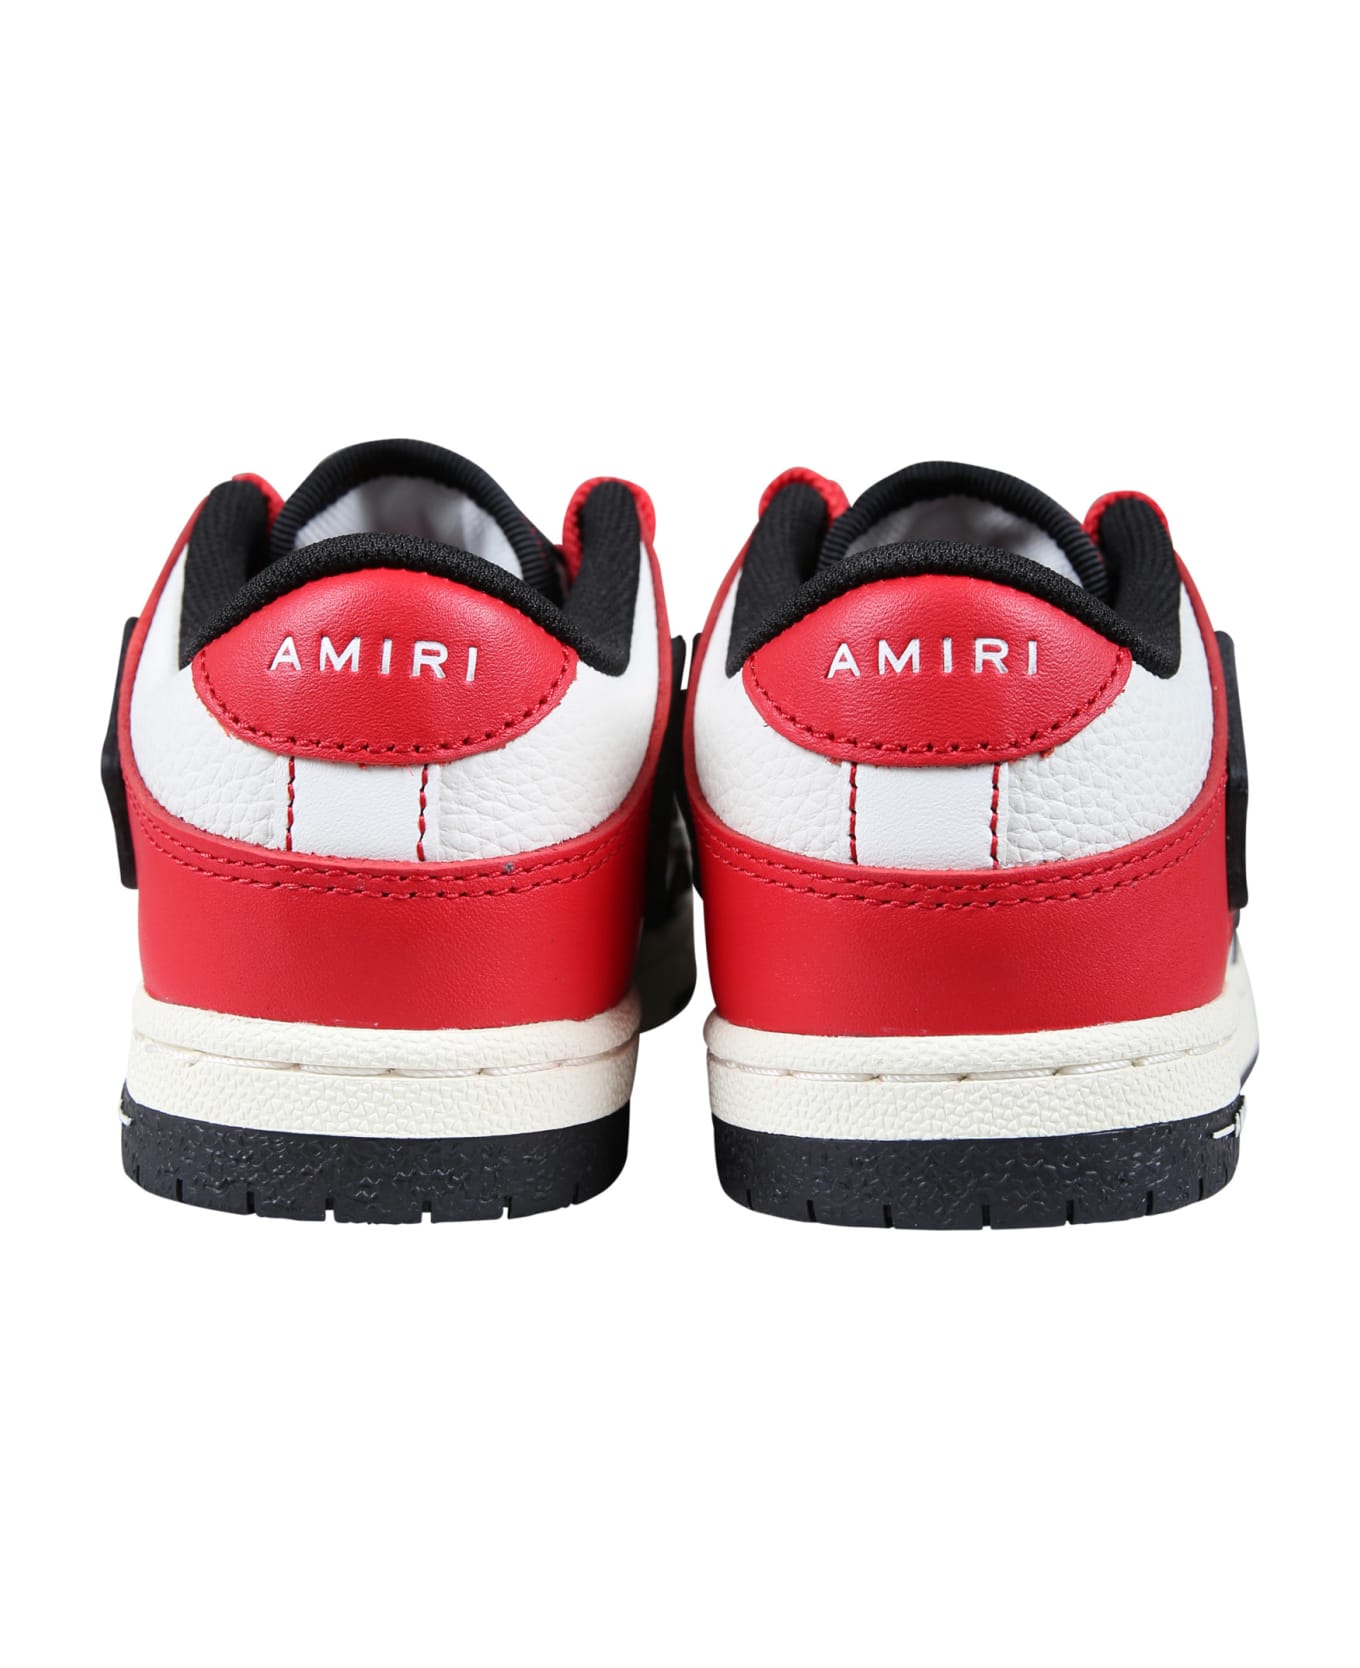 AMIRI Multicolor Sneakers For Kids With Logo - Multicolor